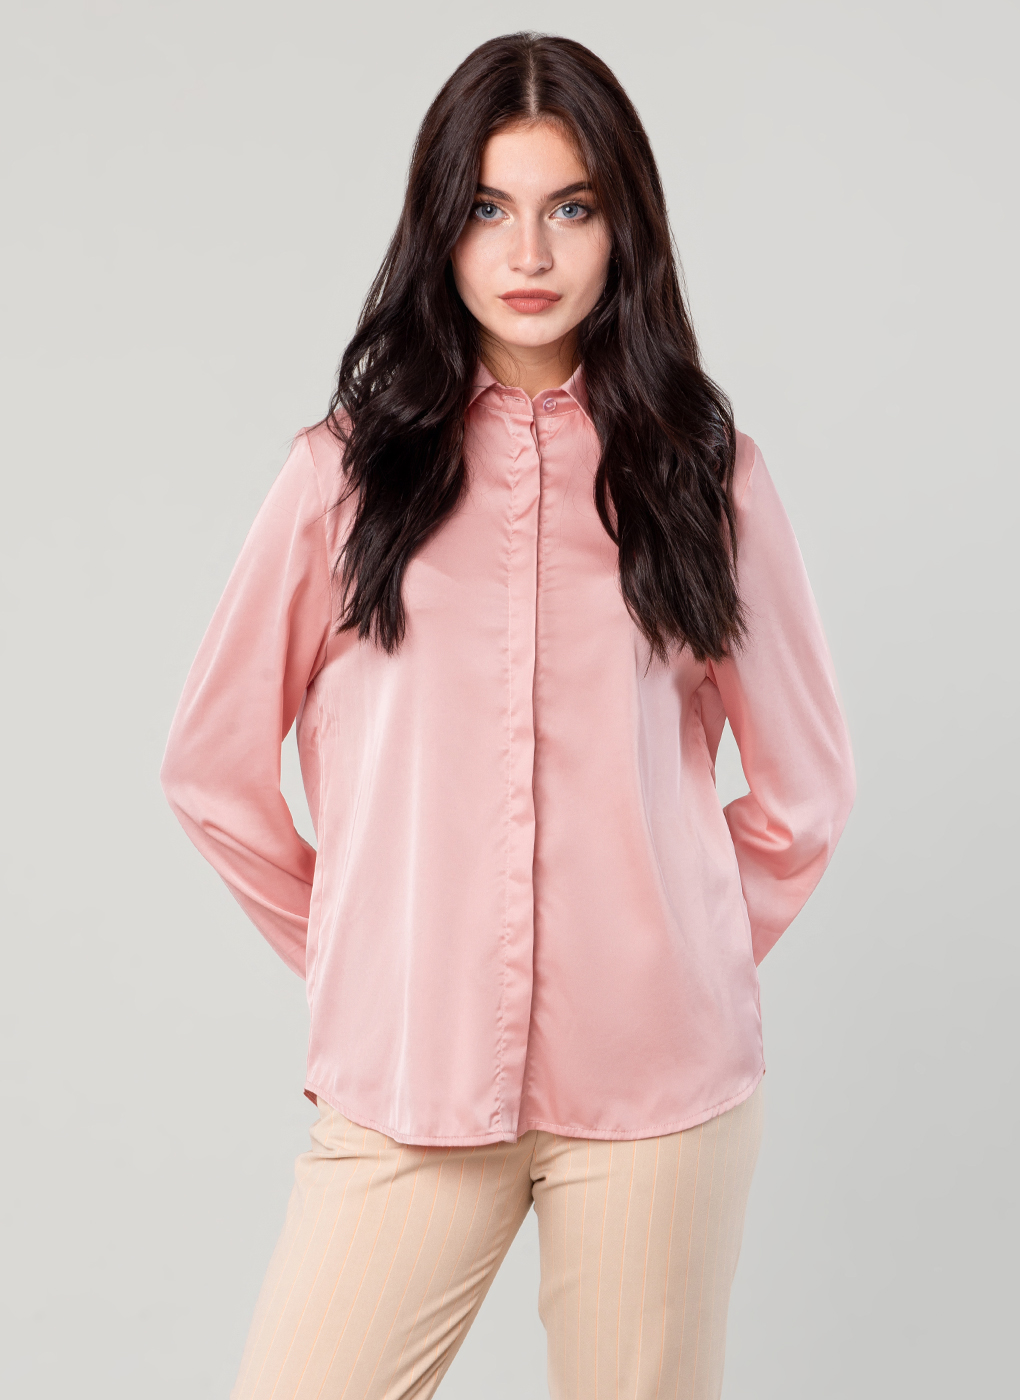 Блуза женская SCANDZA 61656 розовая 46 RU